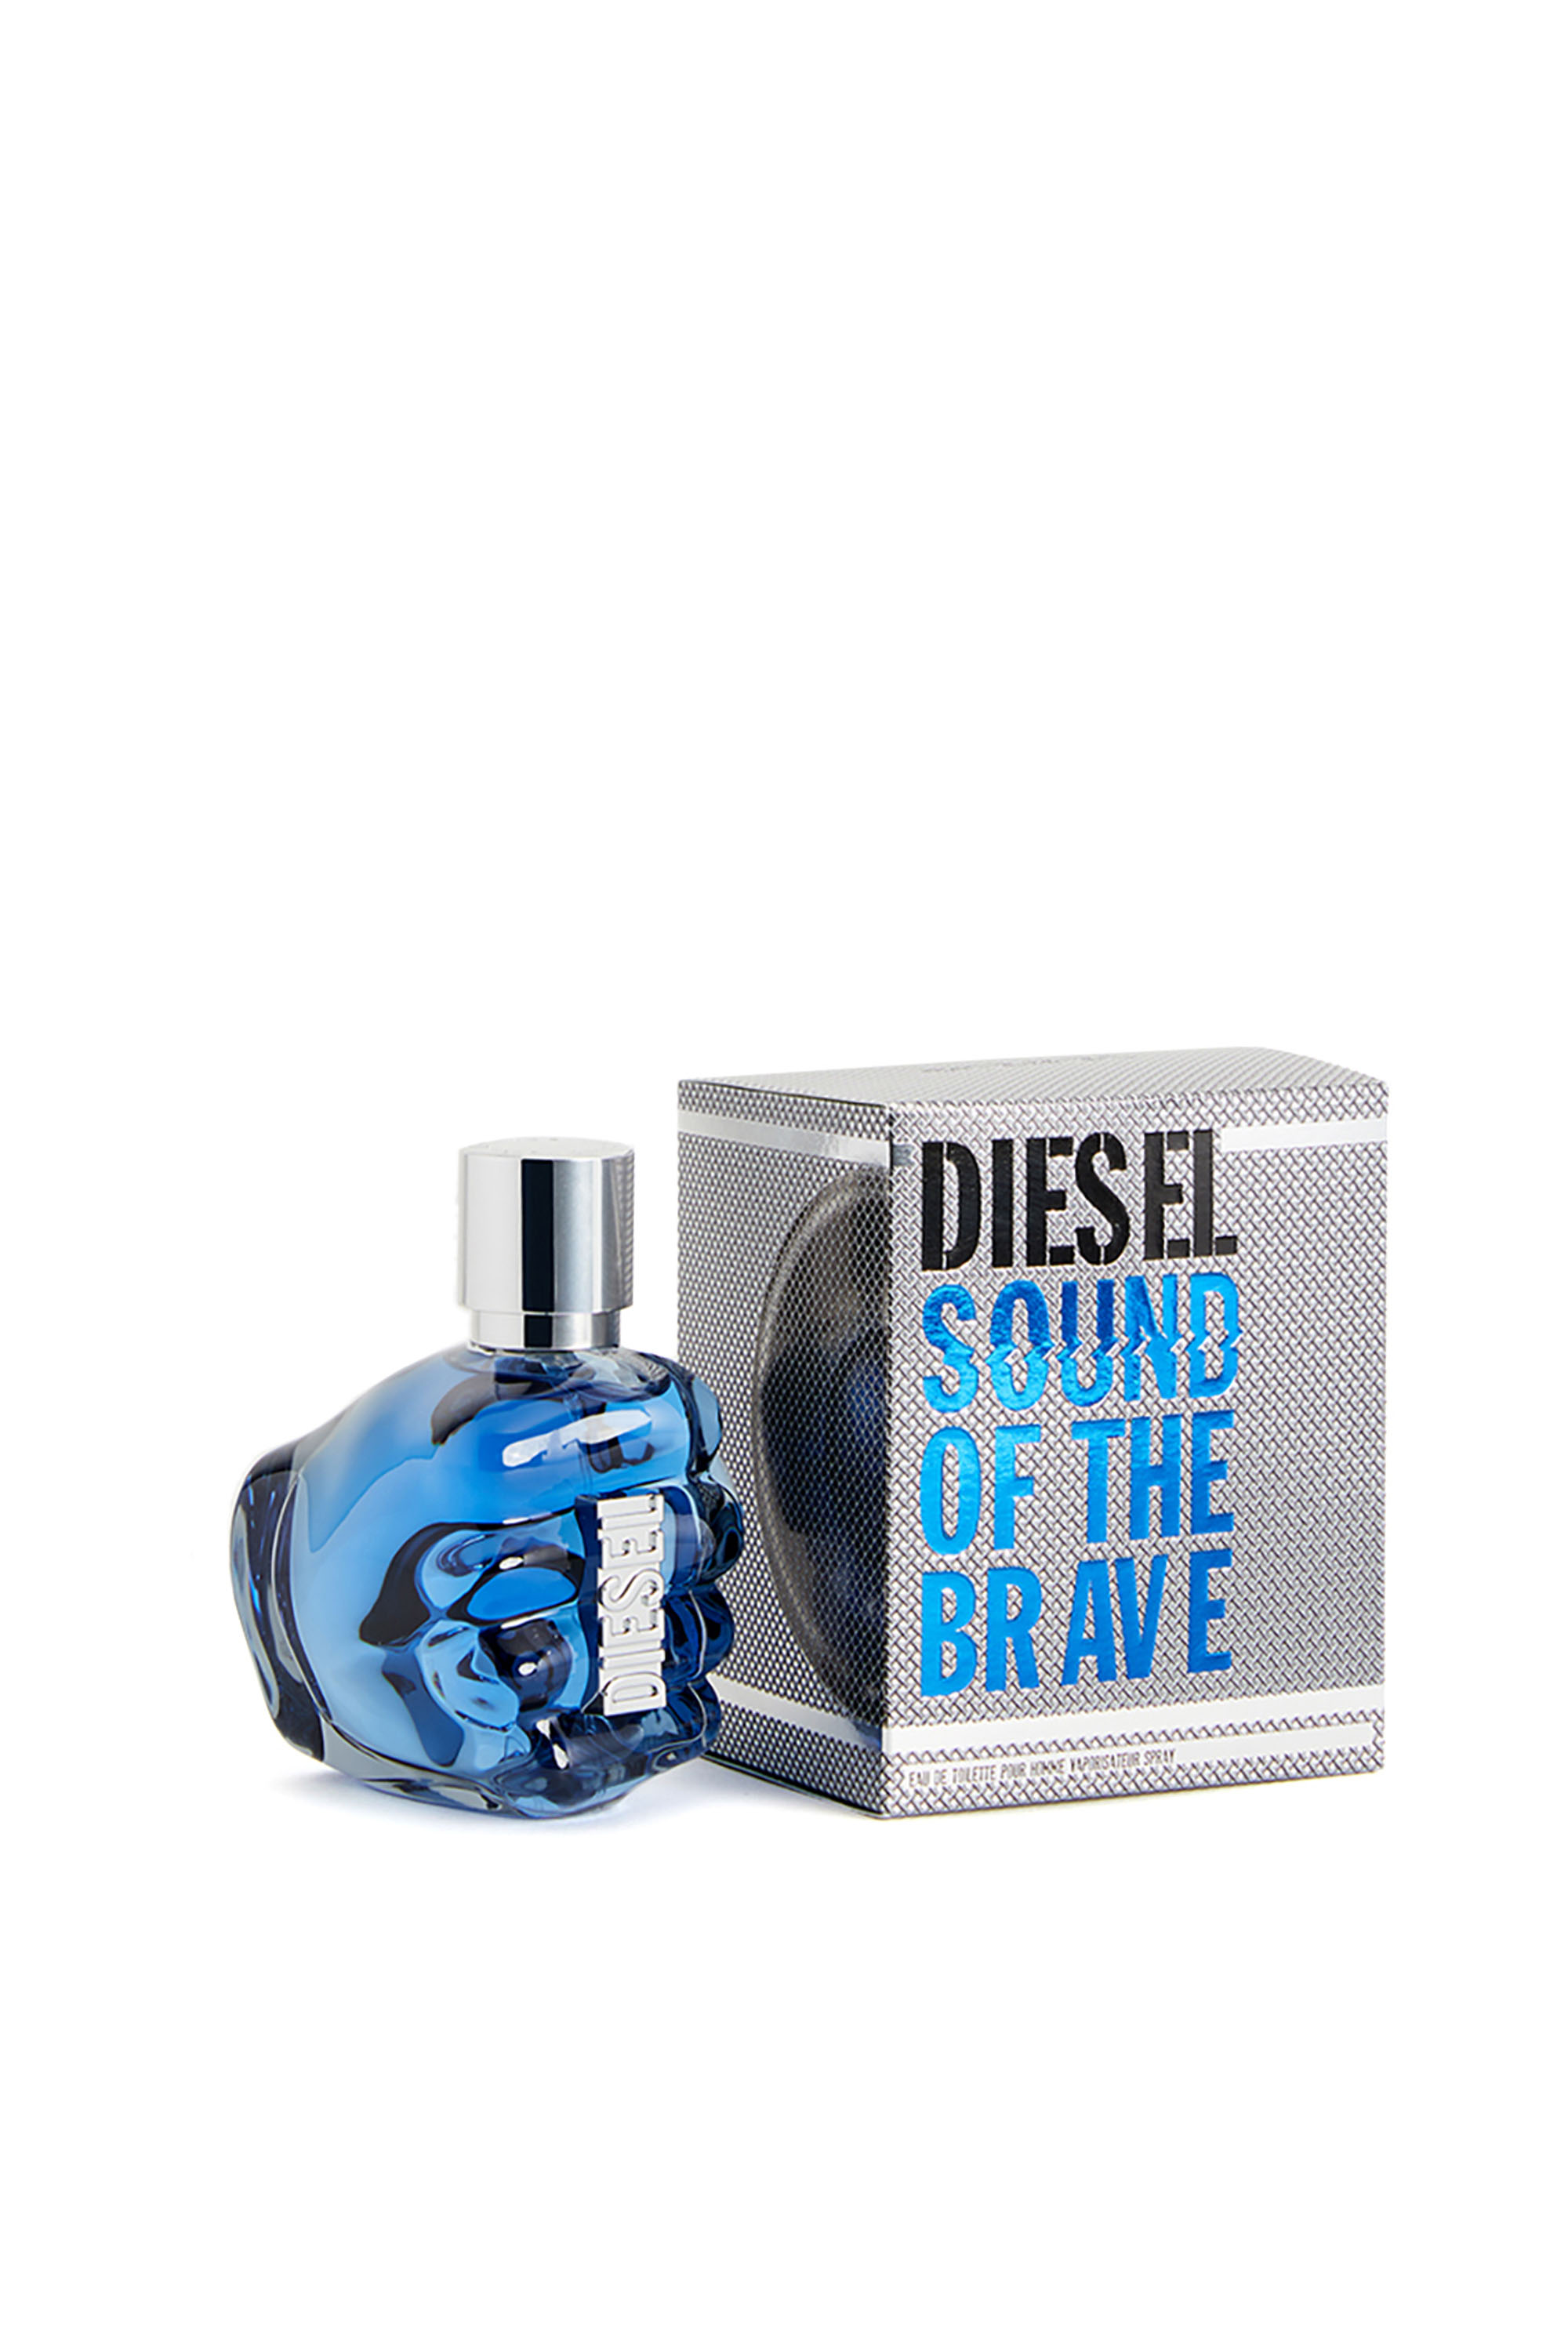 Diesel - SOUND OF THE BRAVE 35ML, Bleu - Image 2